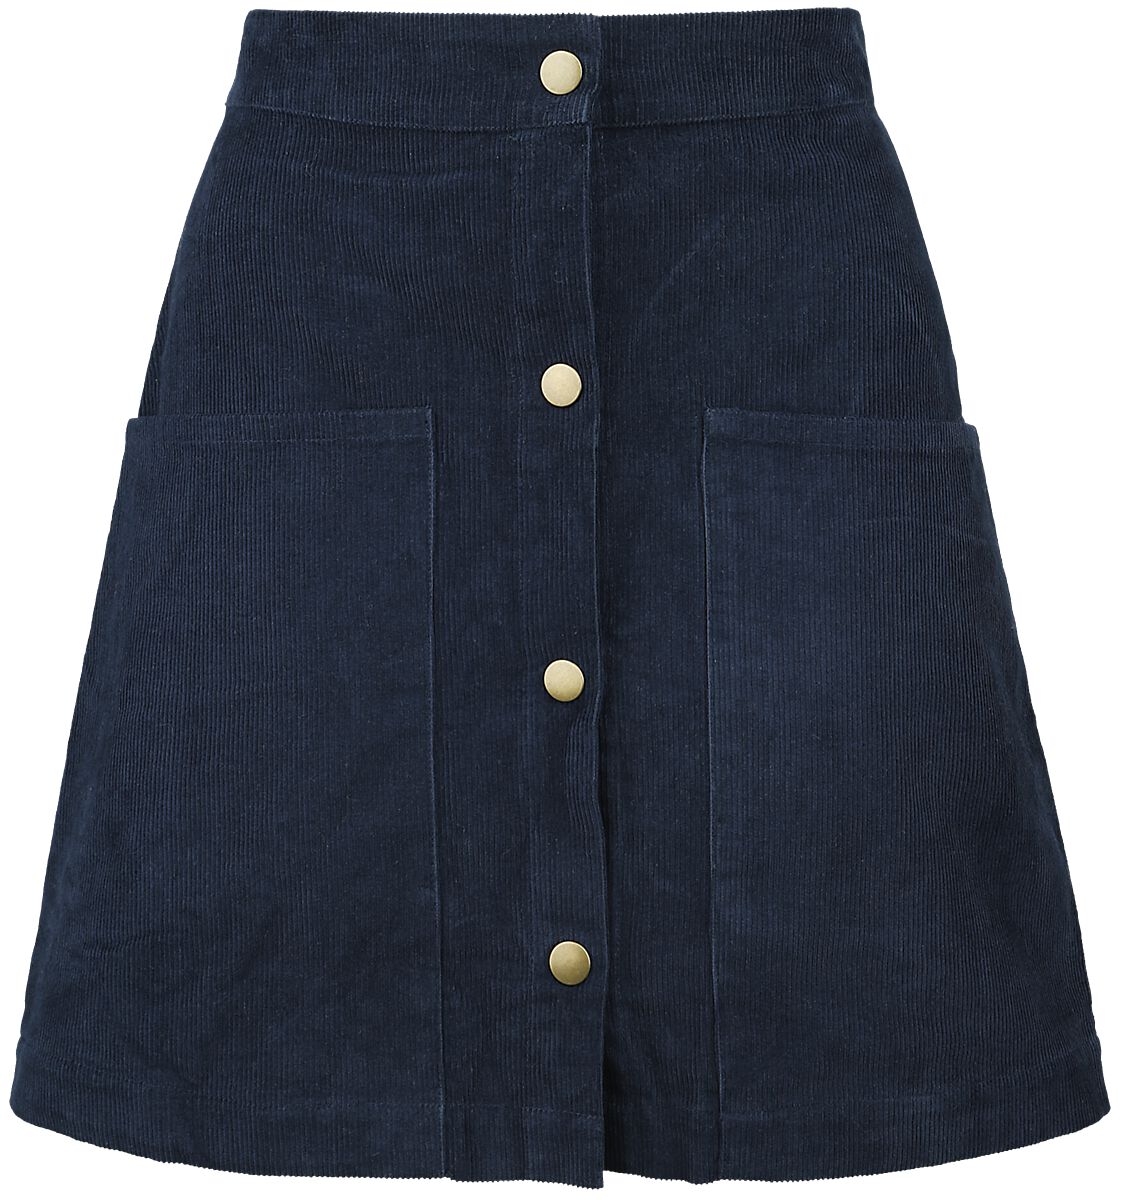 Timeless London Kurzer Rock - Moxy Skirt - XS bis XL - für Damen - Größe M - blau